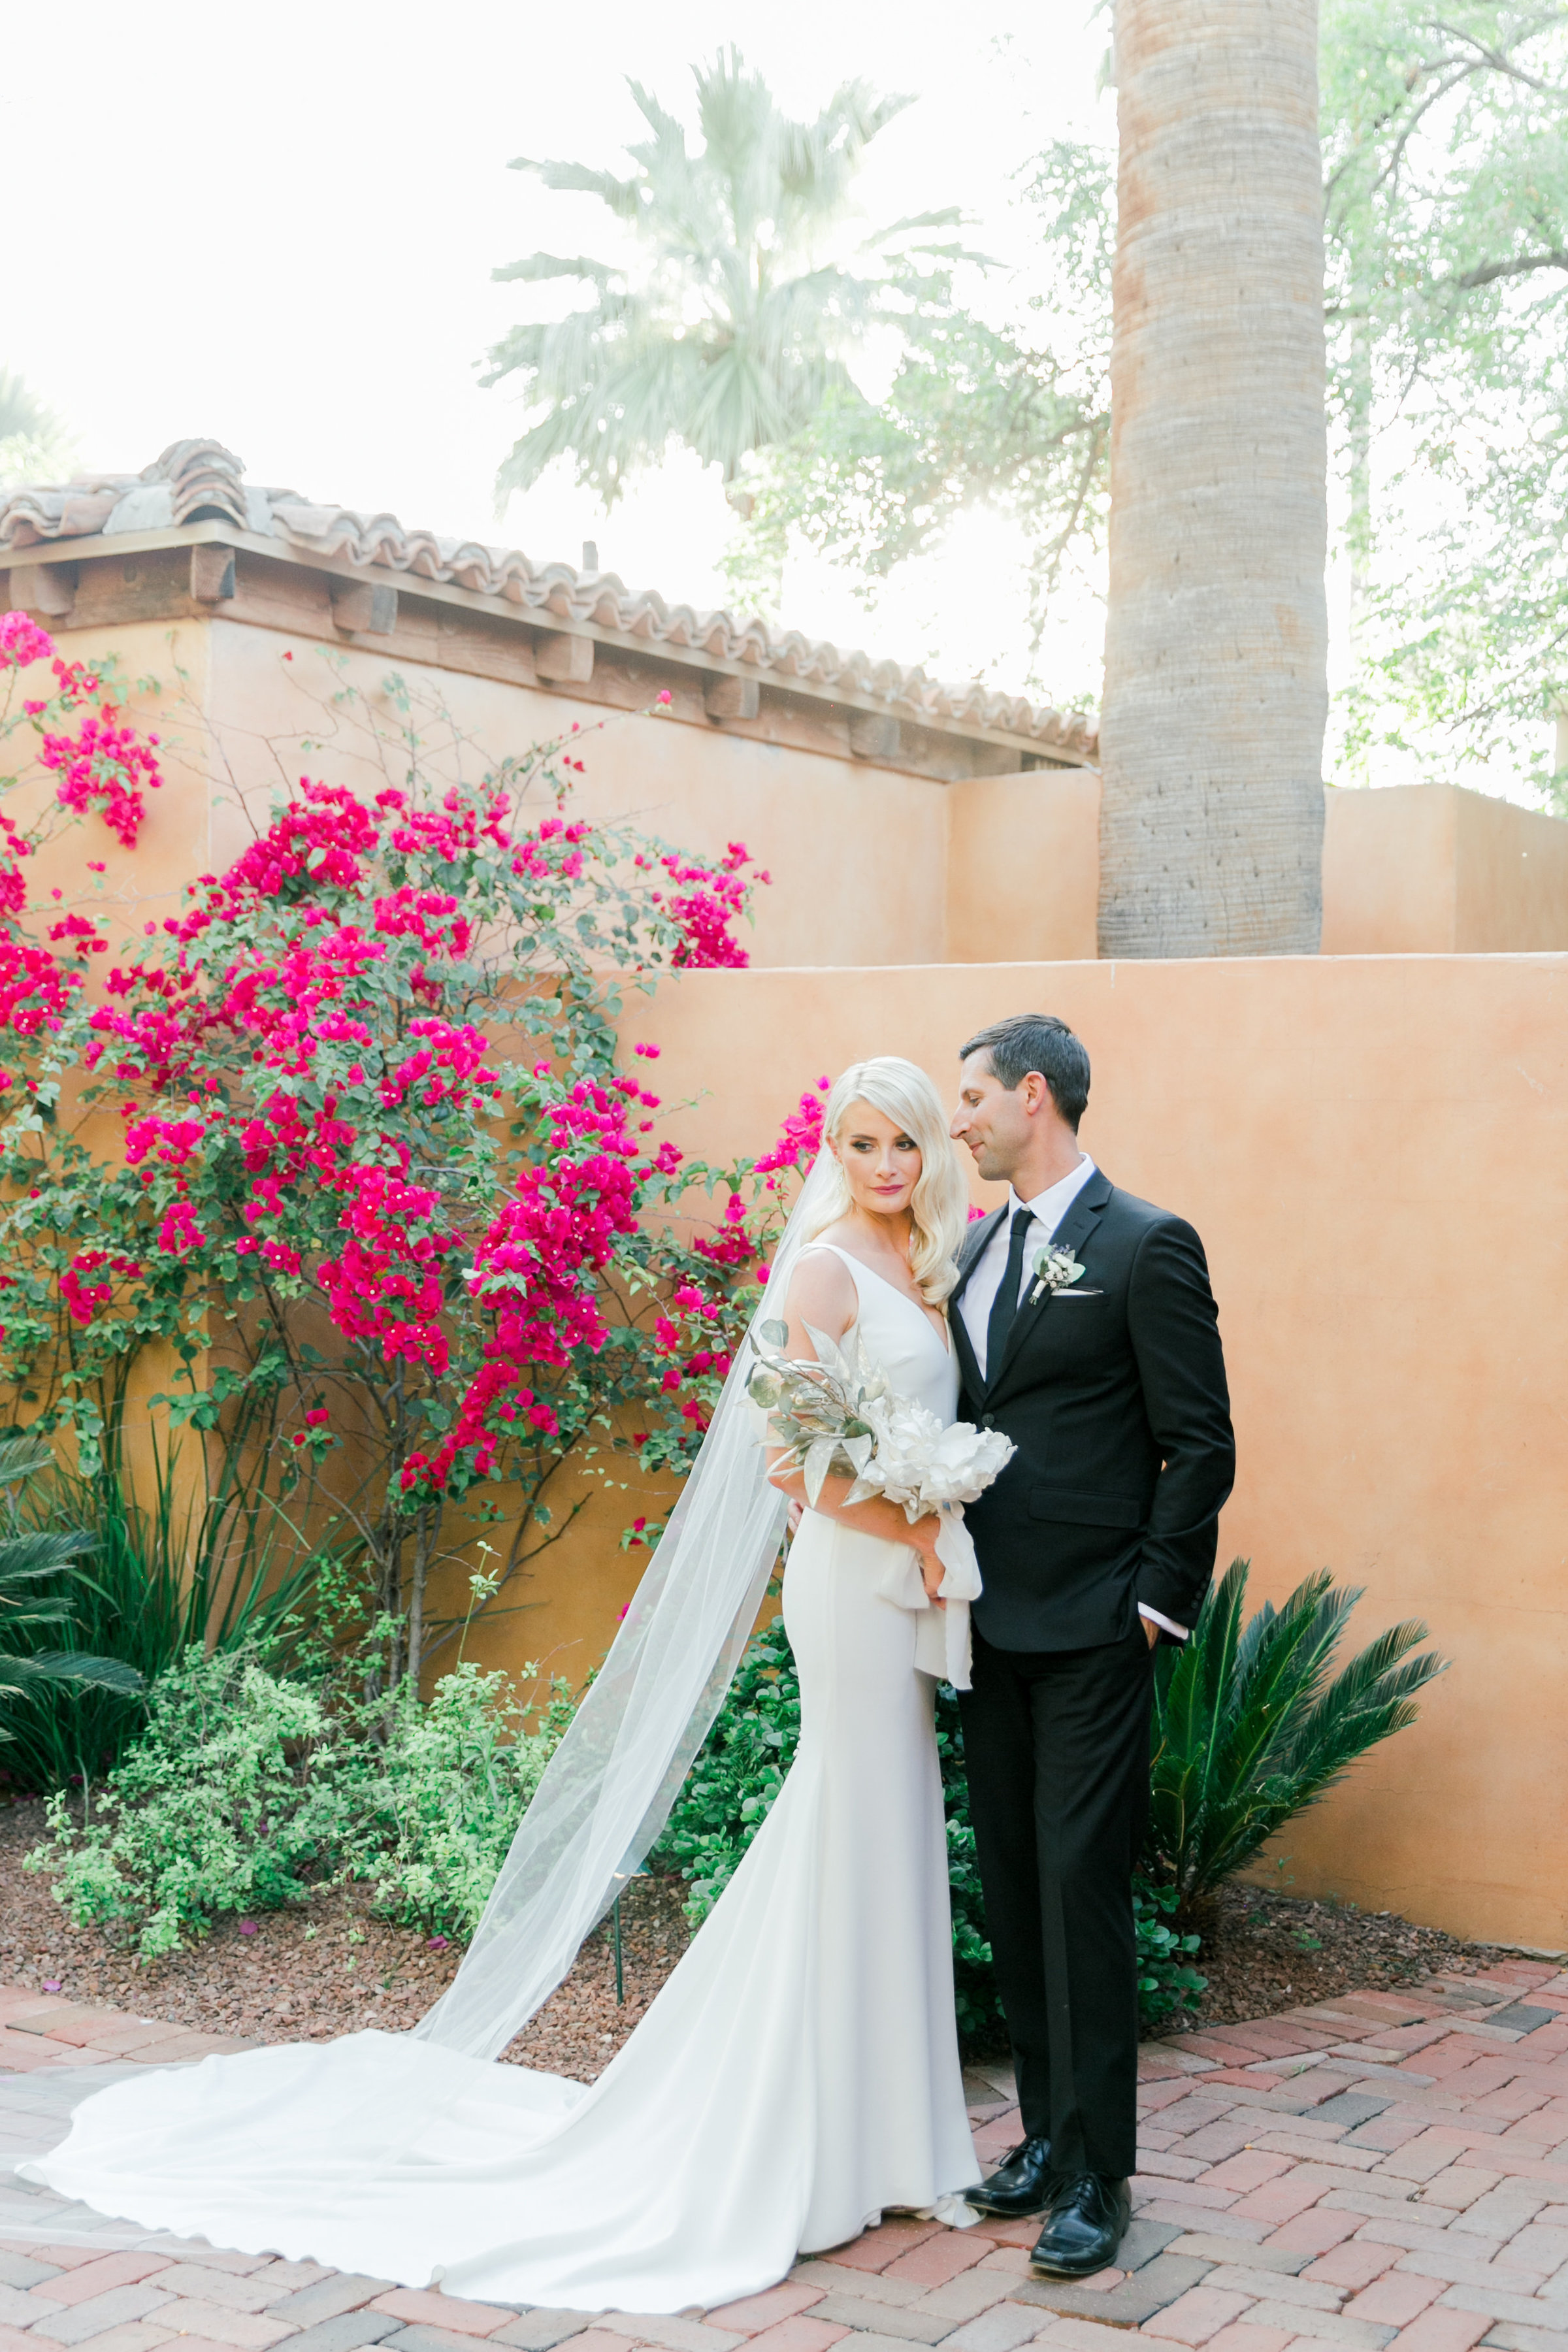 Karlie Colleen Photography - Arizona Wedding - Royal Palms Resort- Alex & Alex-112